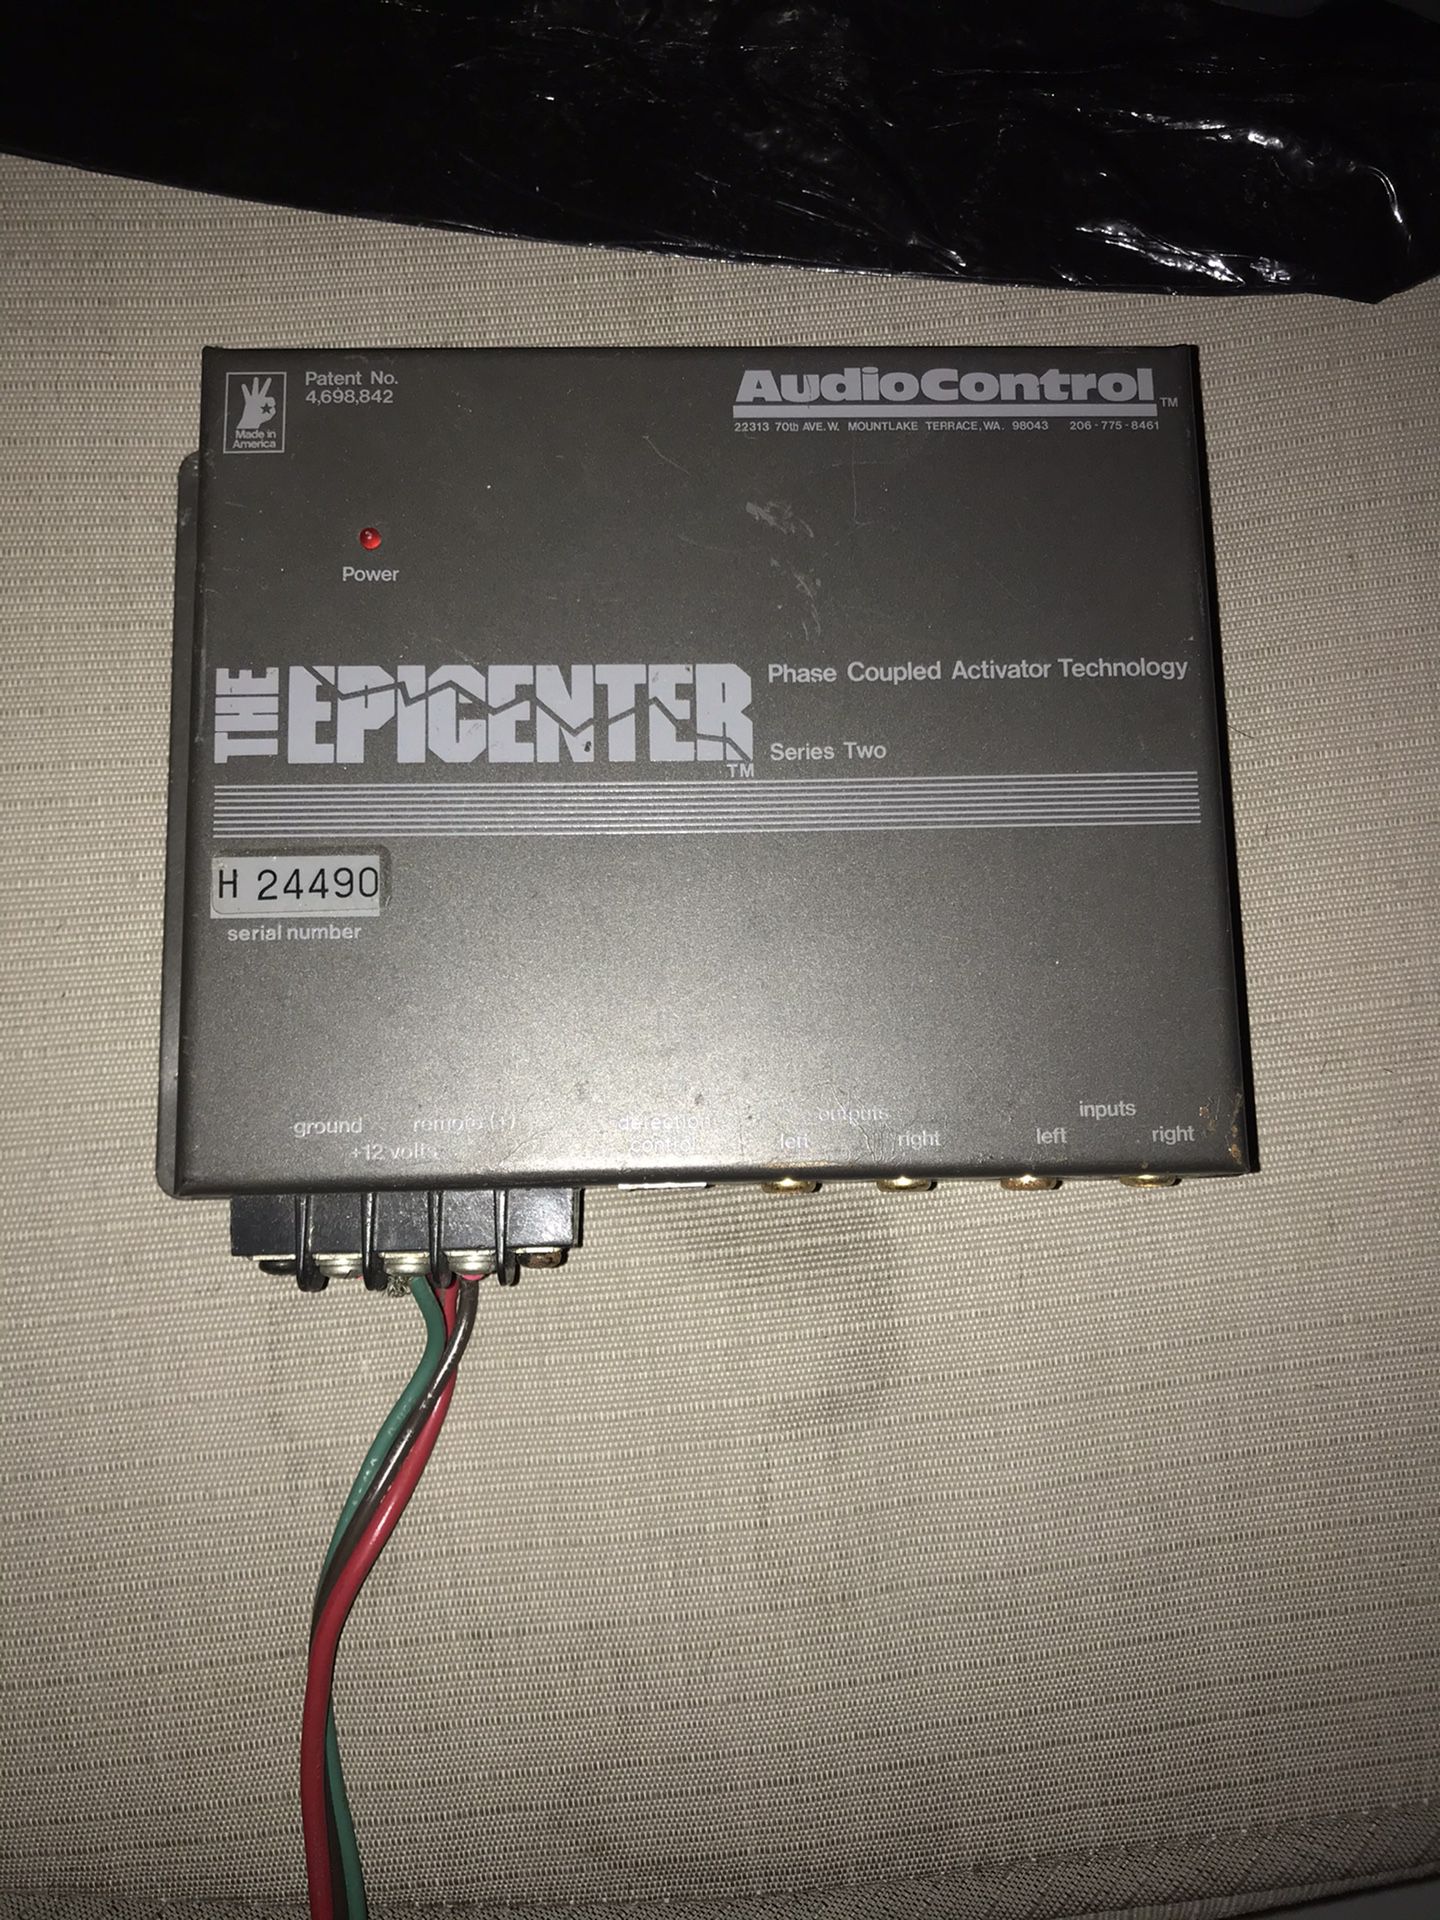 The Epicenter audio control